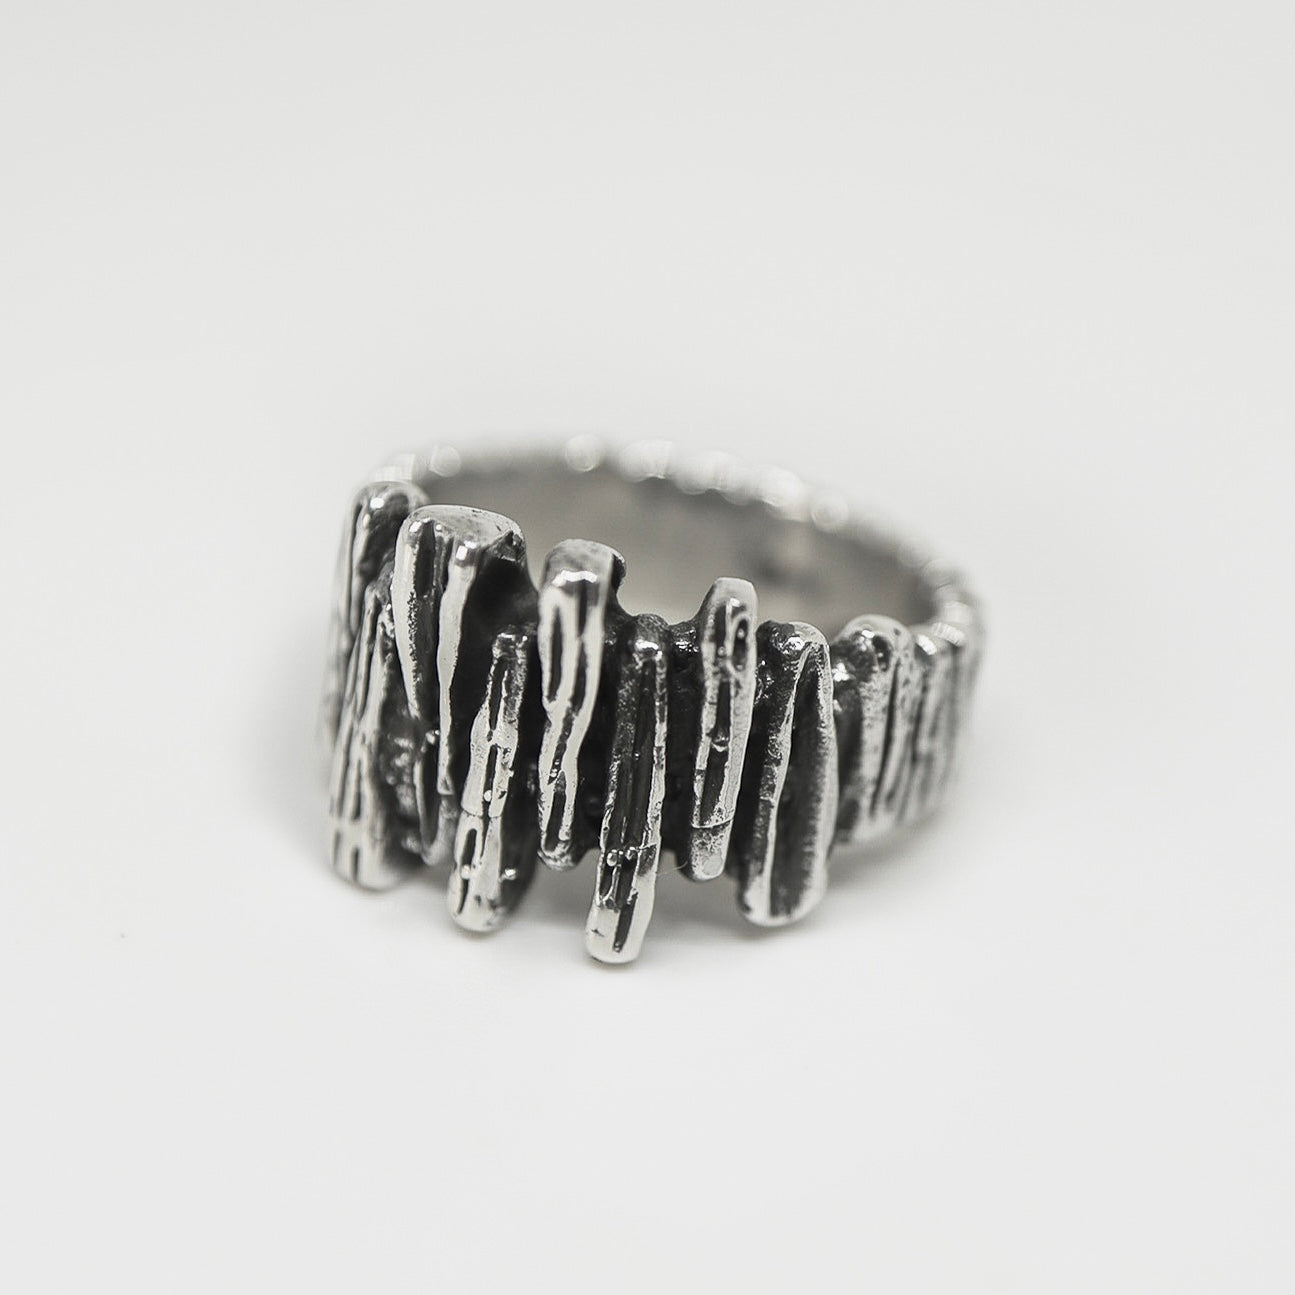 Silver ring shaped like a rock wall